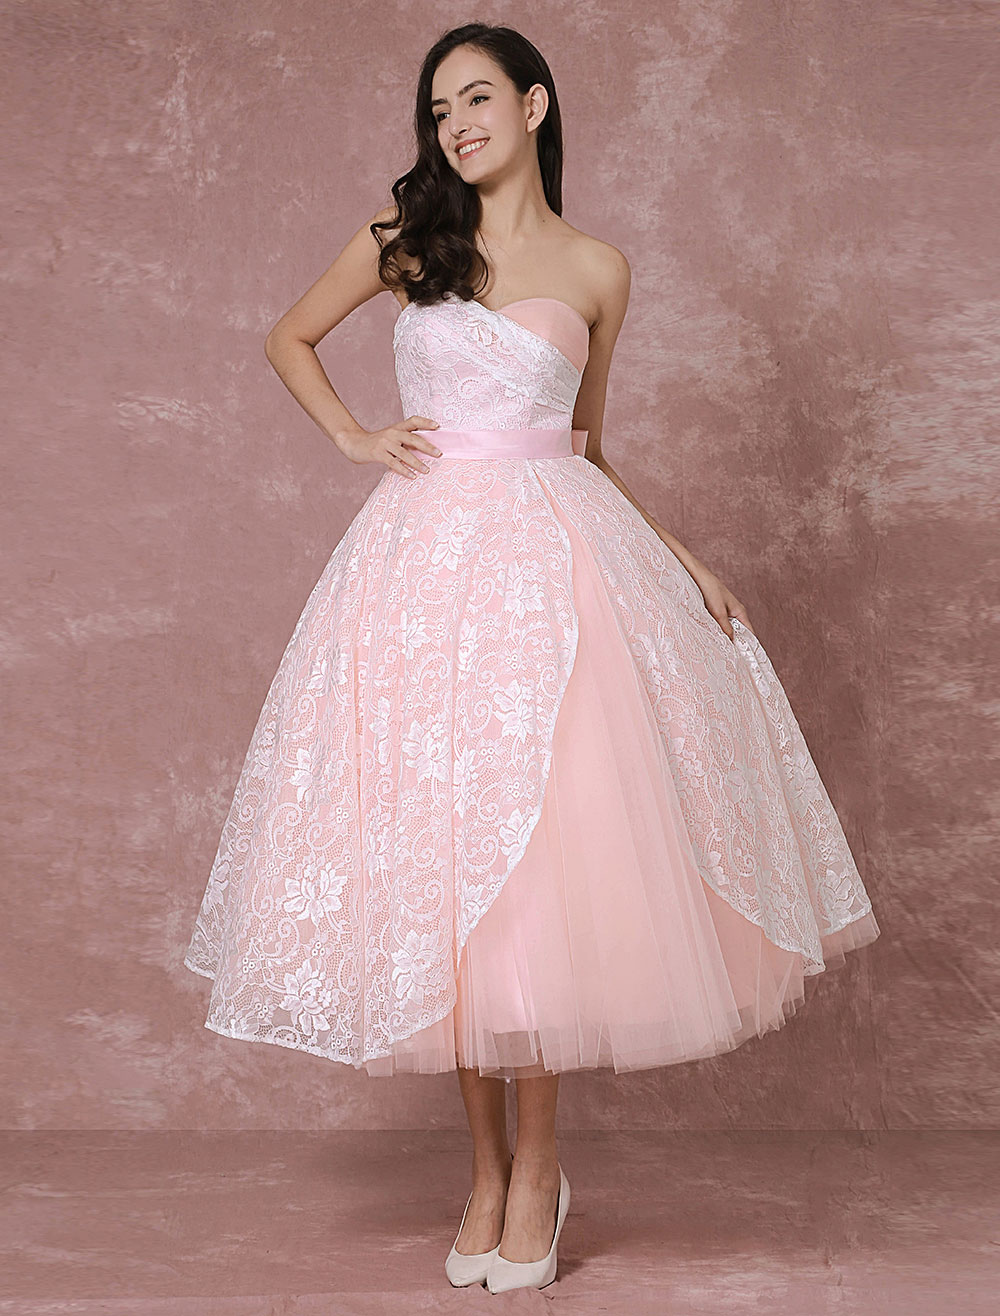 Qualcunoeraunpograsso: Short Pink Wedding Dresses